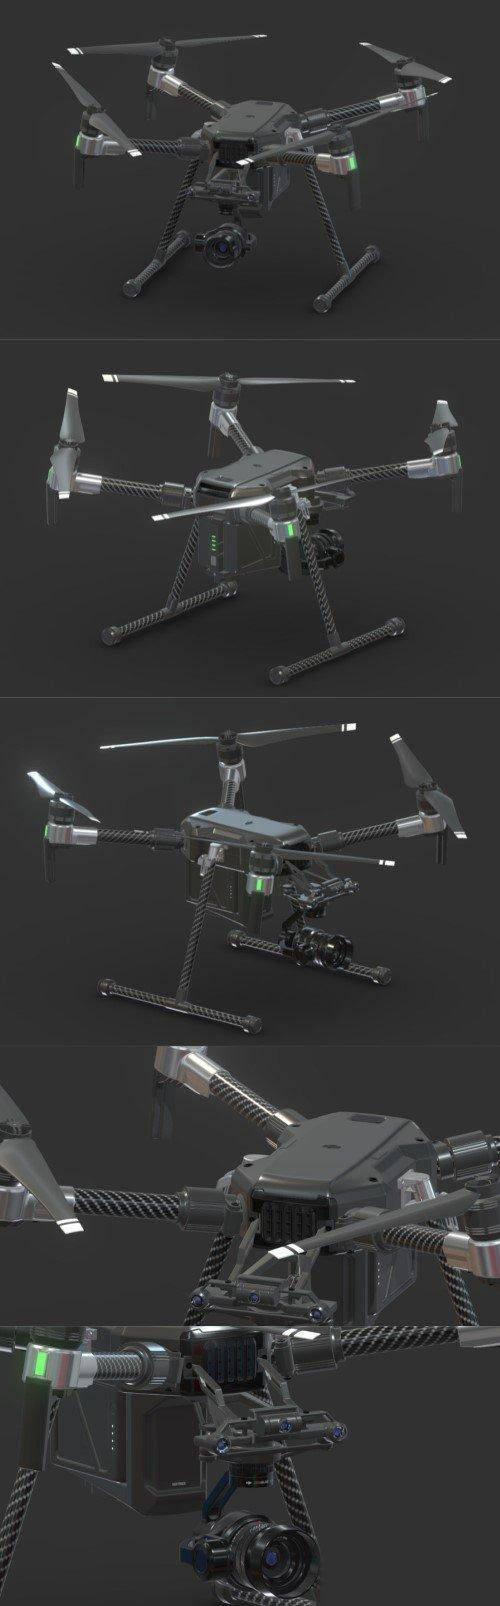 DJI Matrice 200 Drone - 3d model